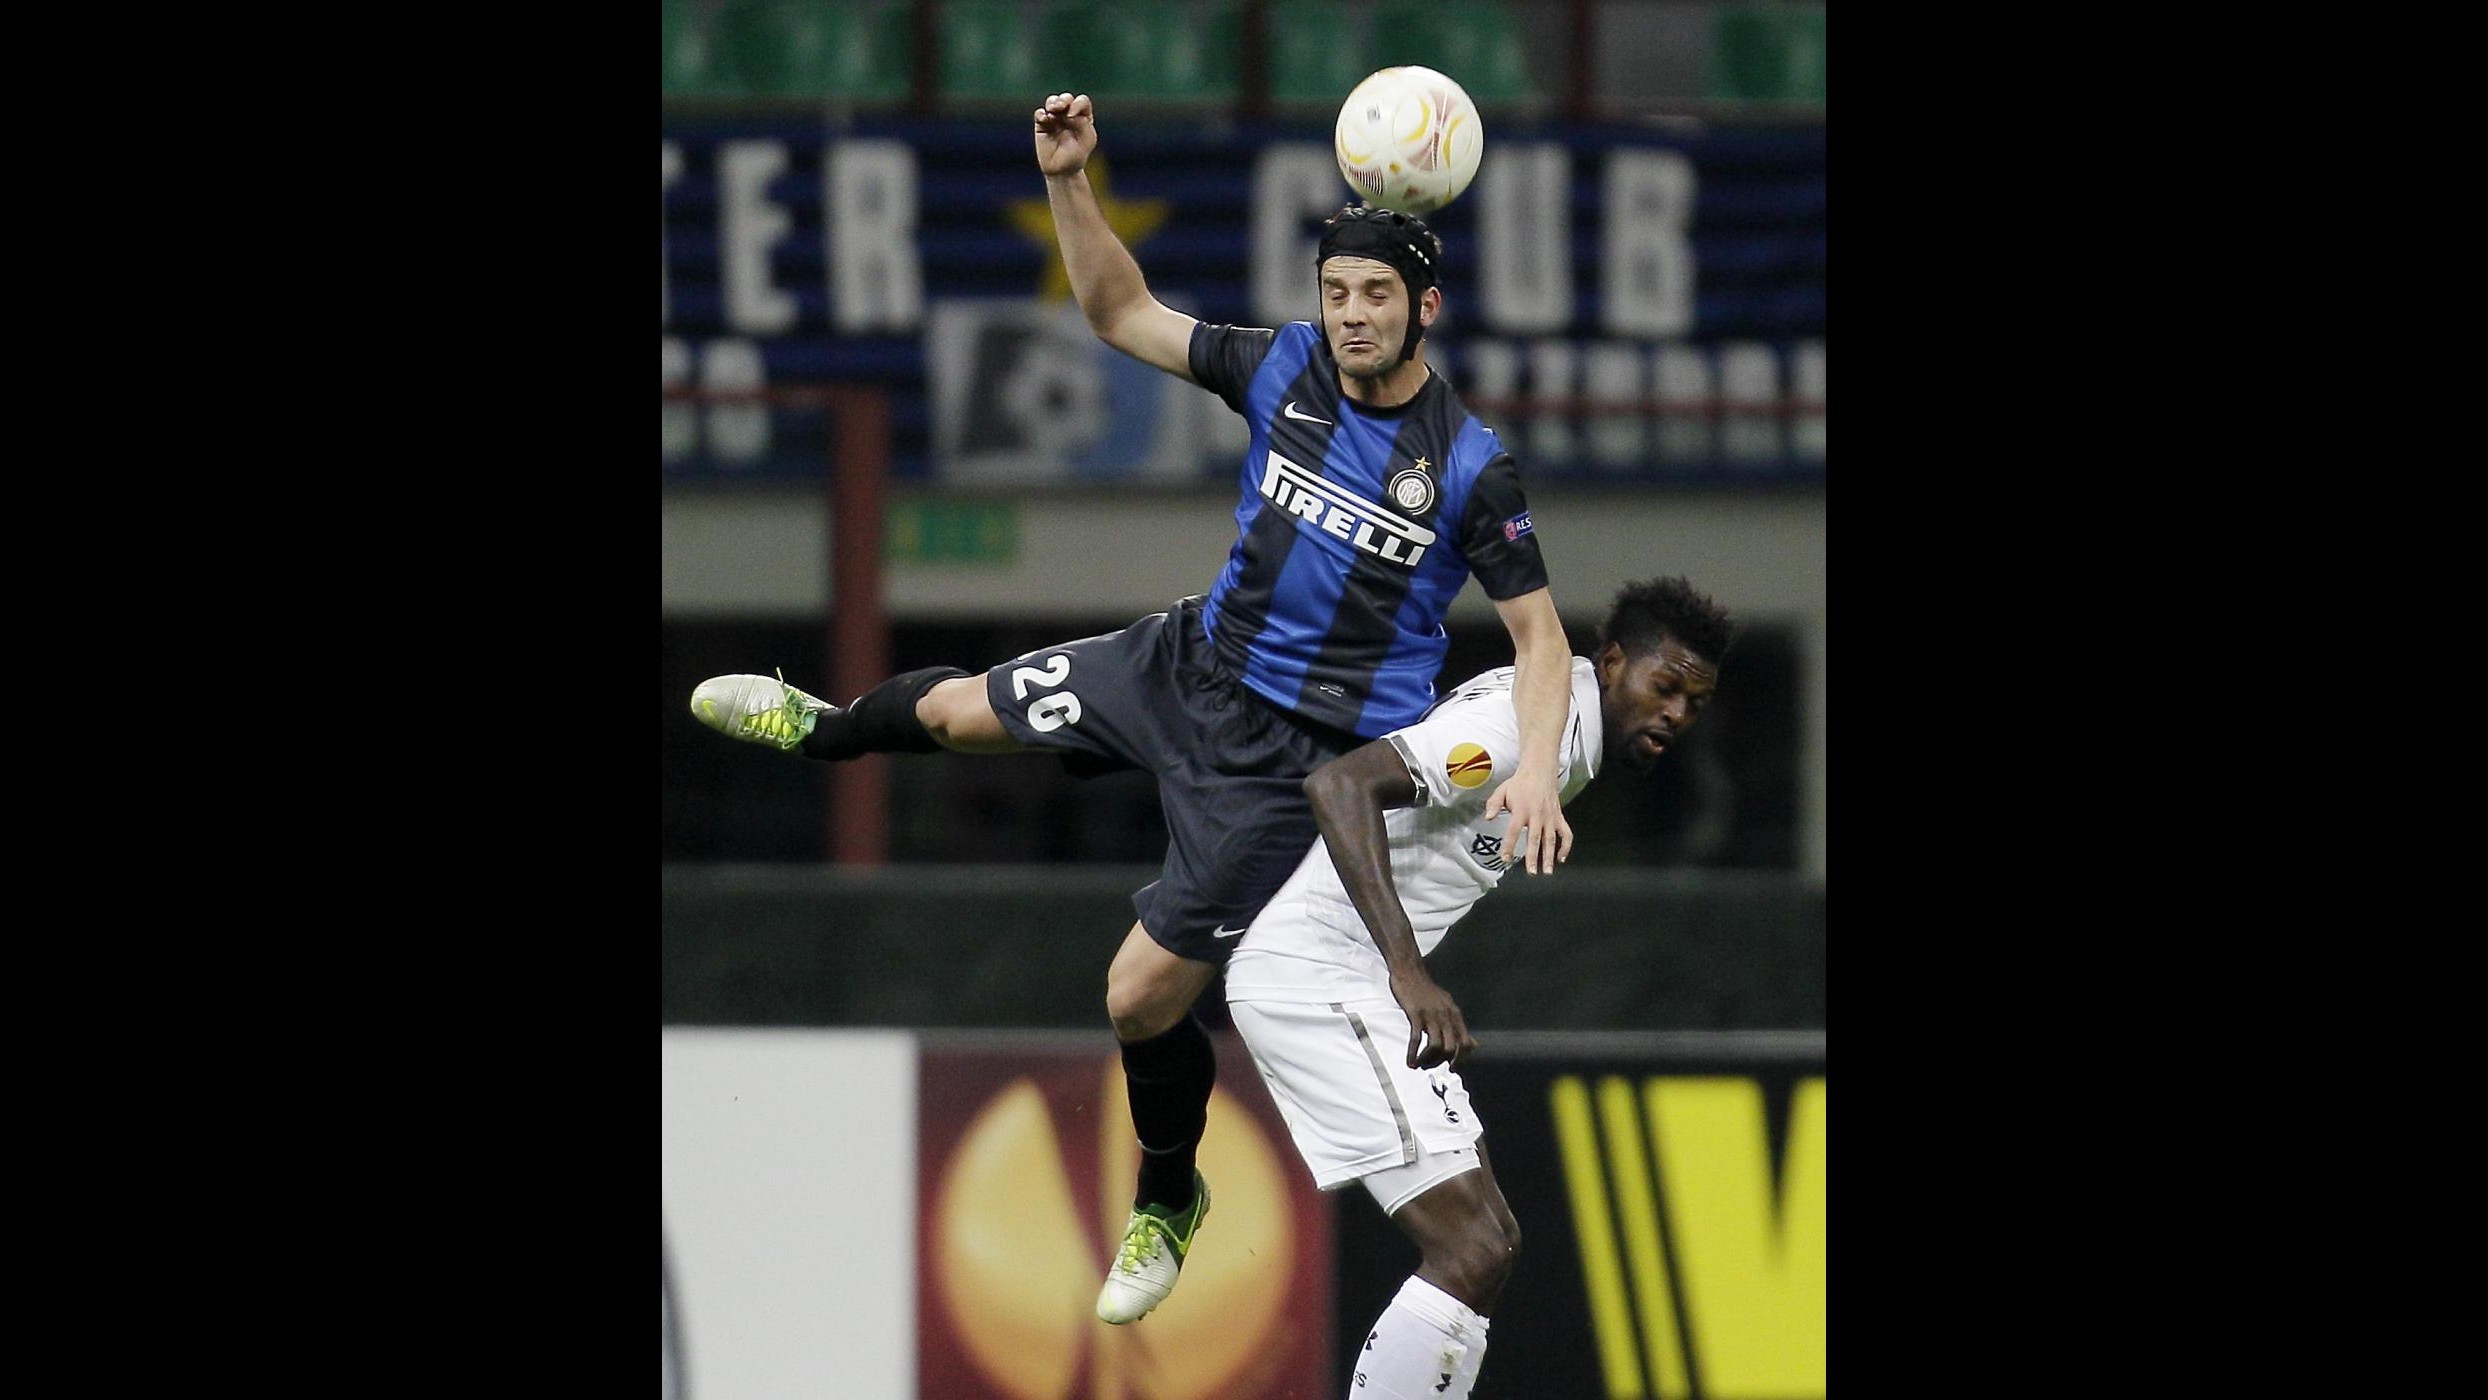 Cori razzisti ad Adebayor, Uefa multa Inter di 45mila euro